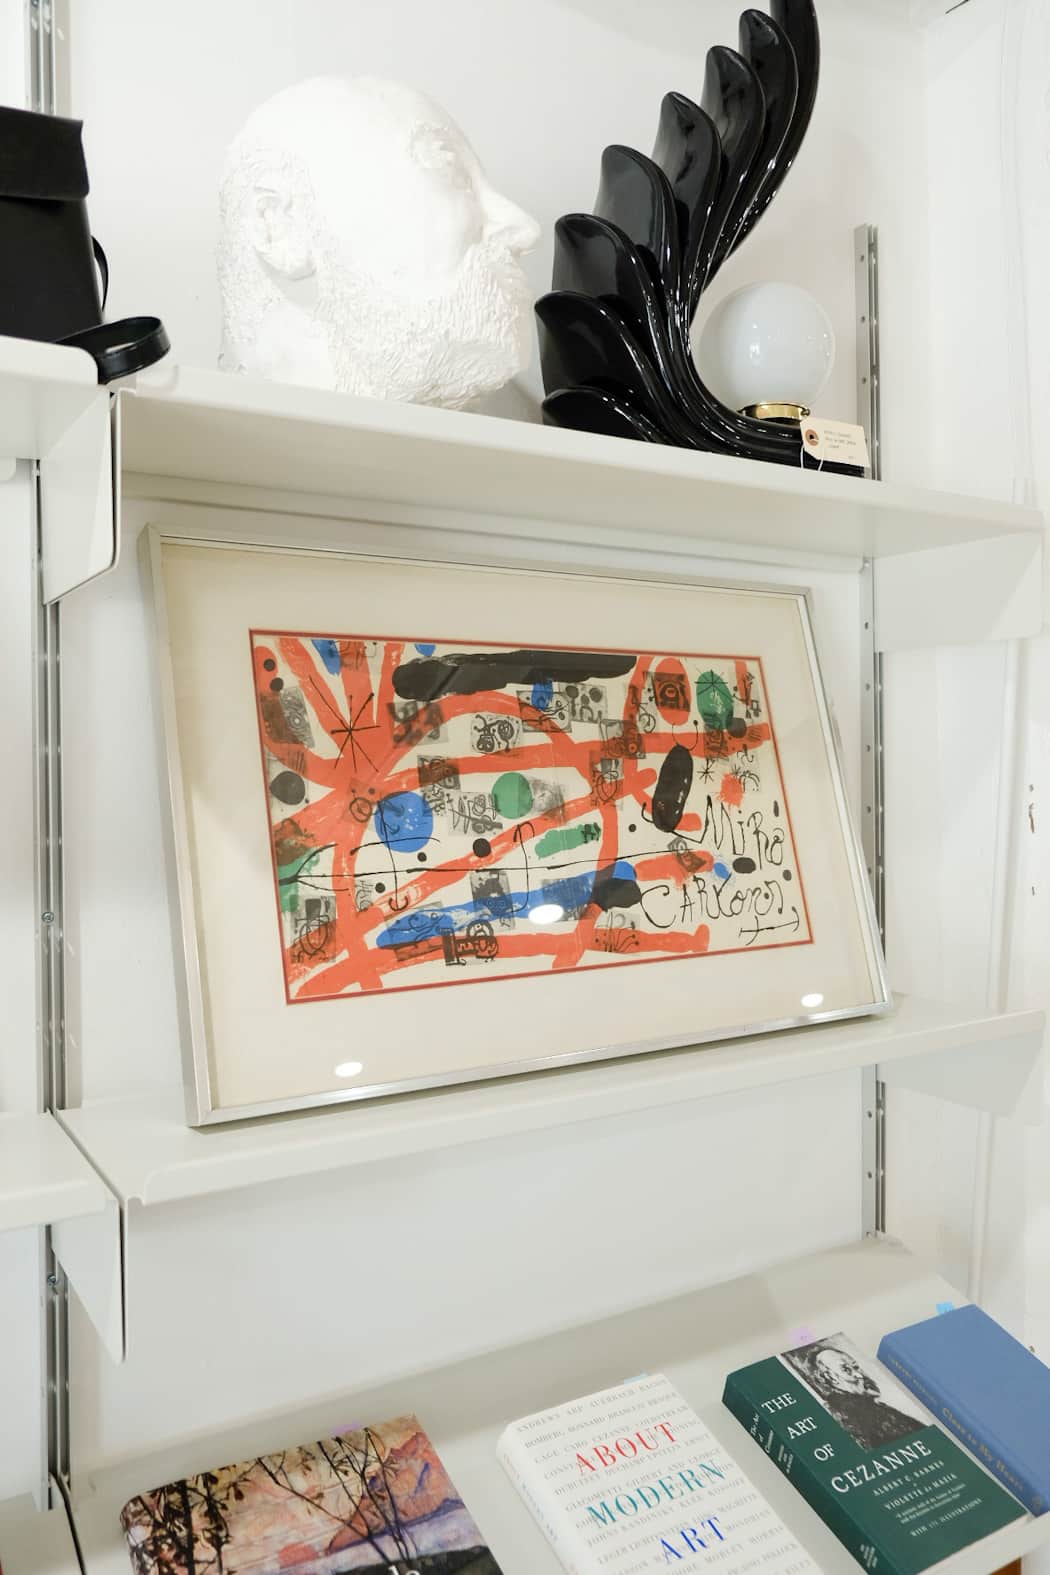 Joan Miro "Derriere Le Miroir" Original 1965 Lithograph